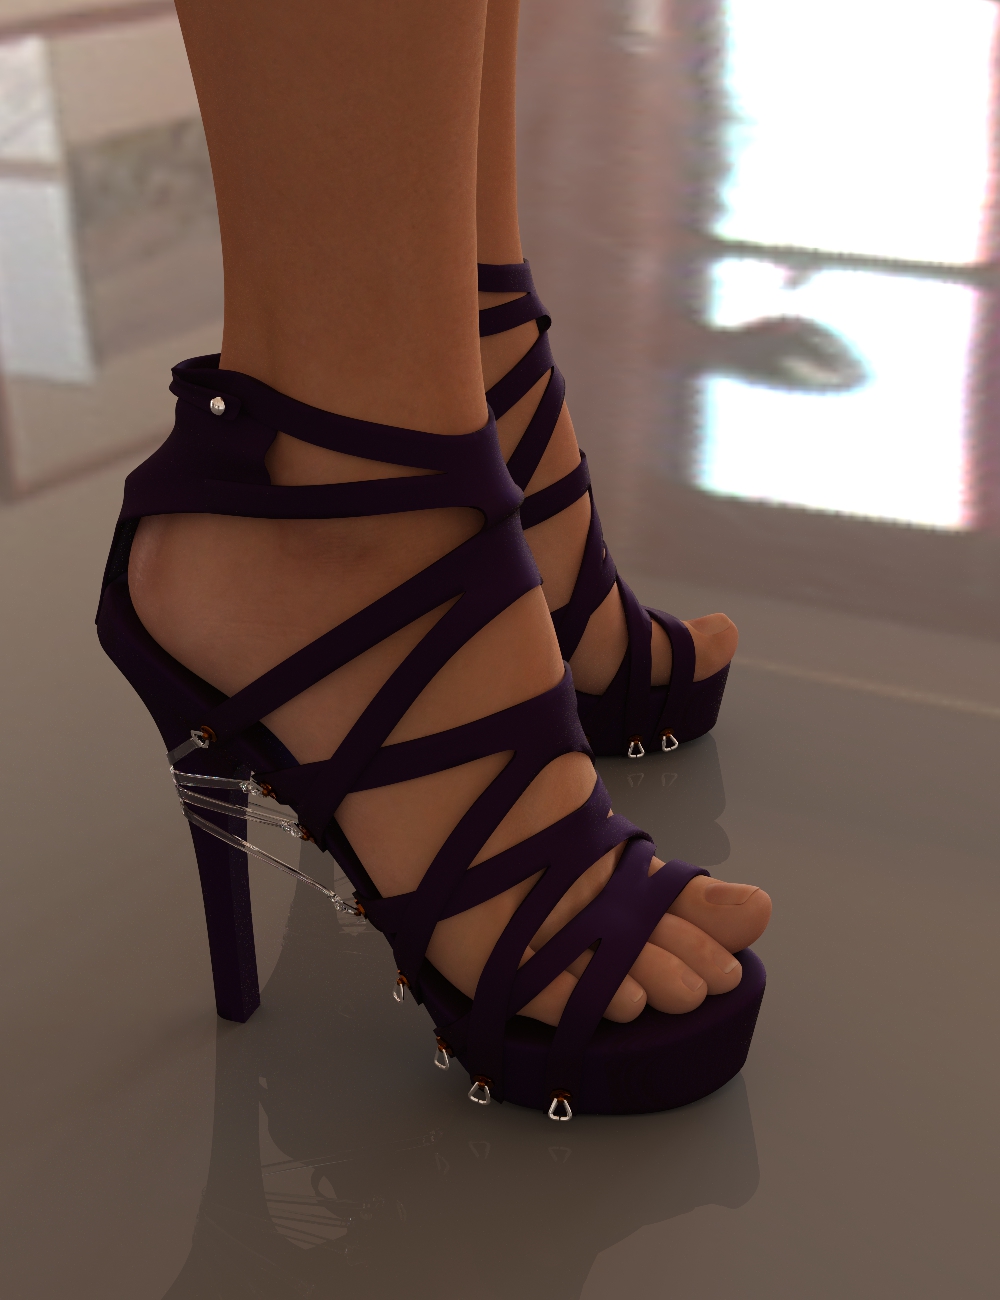 Strap Pump Heels for Genesis 3 Female(s) by: chungdan, 3D Models by Daz 3D